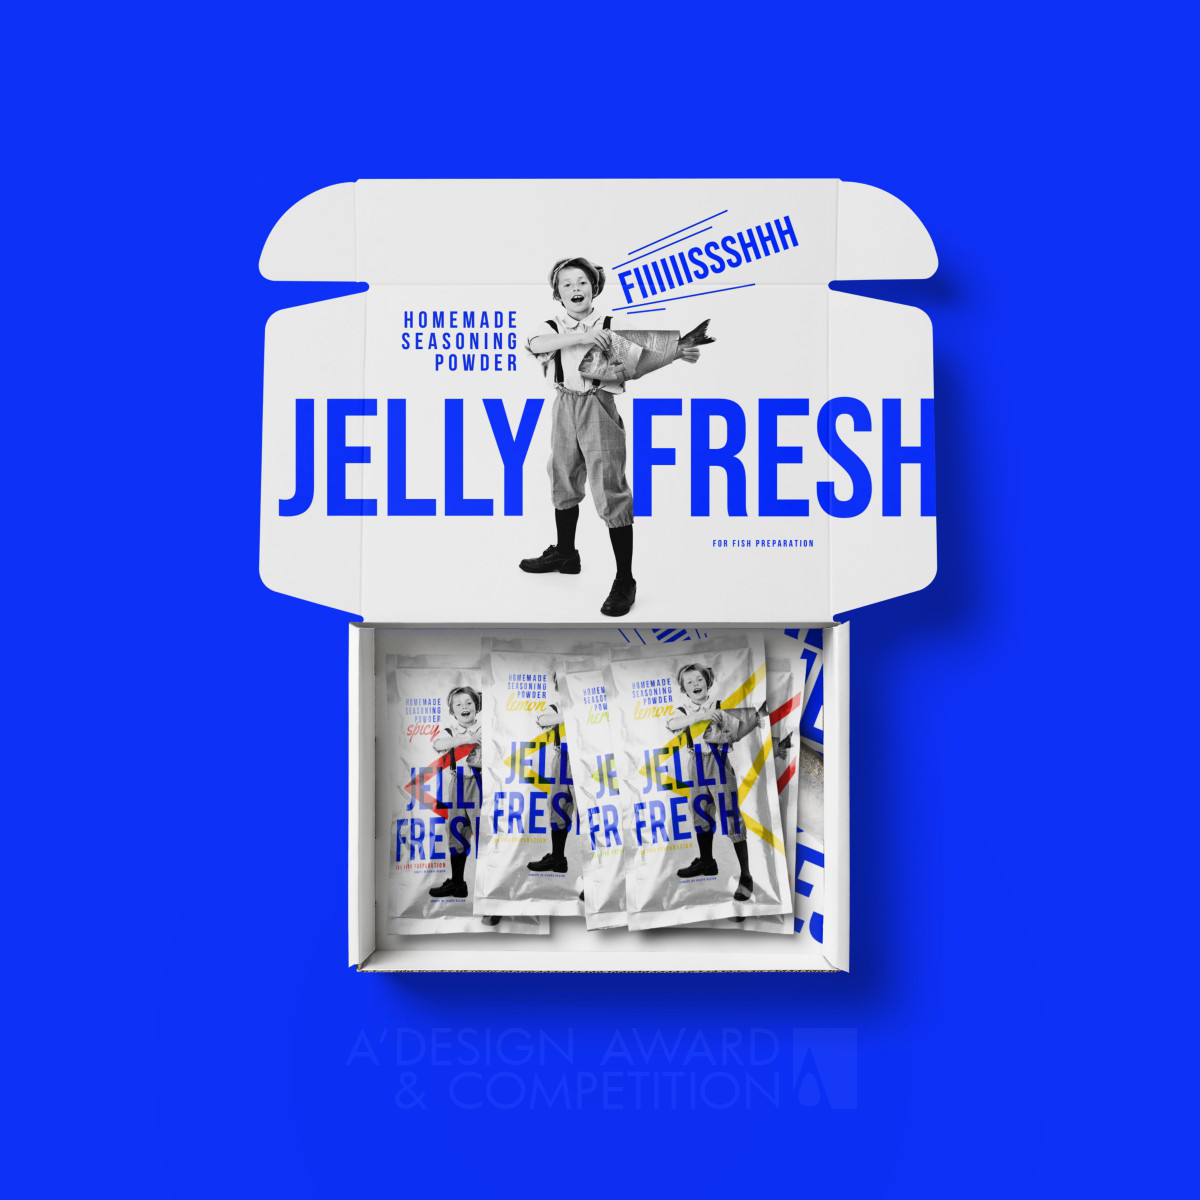 RODRIGO CHIAPARINI wins Silver at the prestigious A' Packaging Design Award with Jelly Fresh Seasoning Brand.